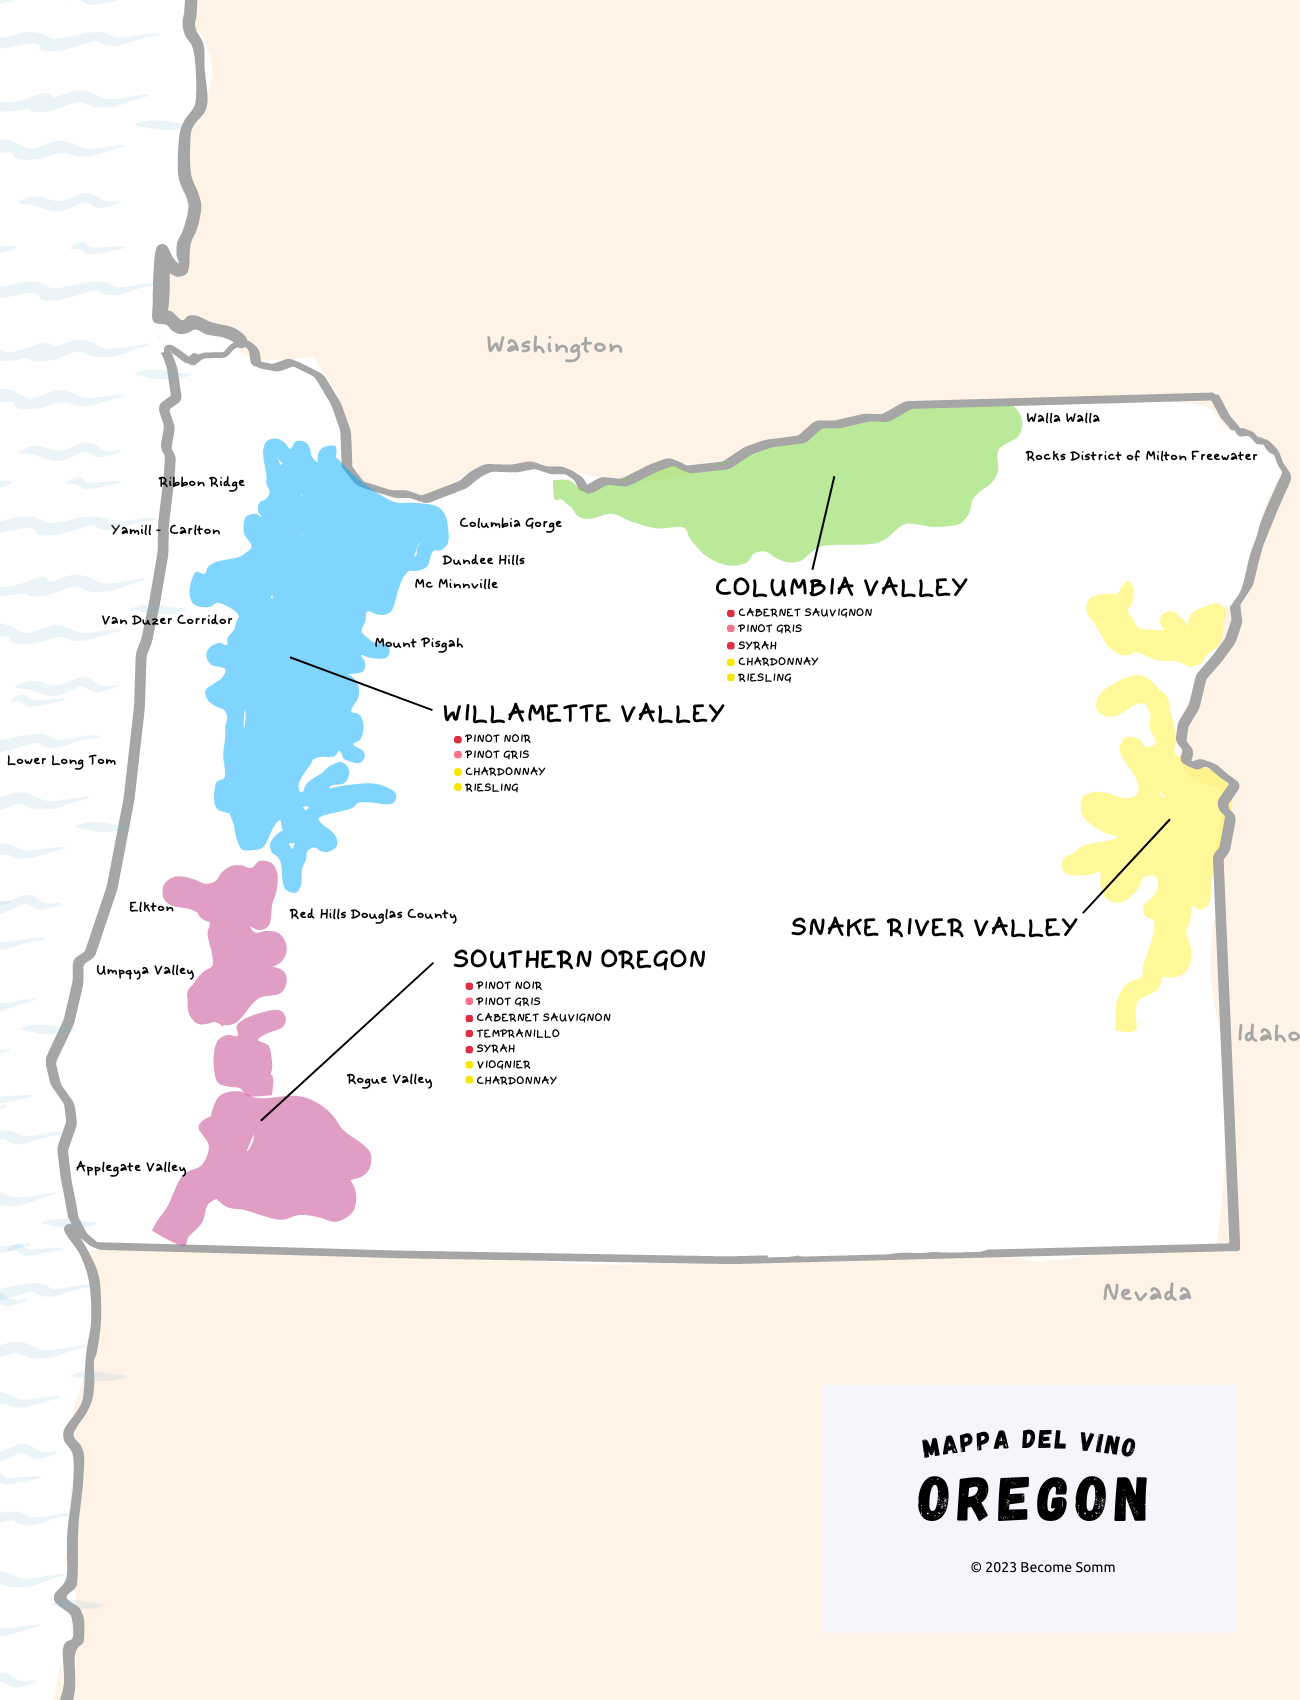 Wine Map Oregon
Mappa del vino Oregon
Carte des vins de Oregon